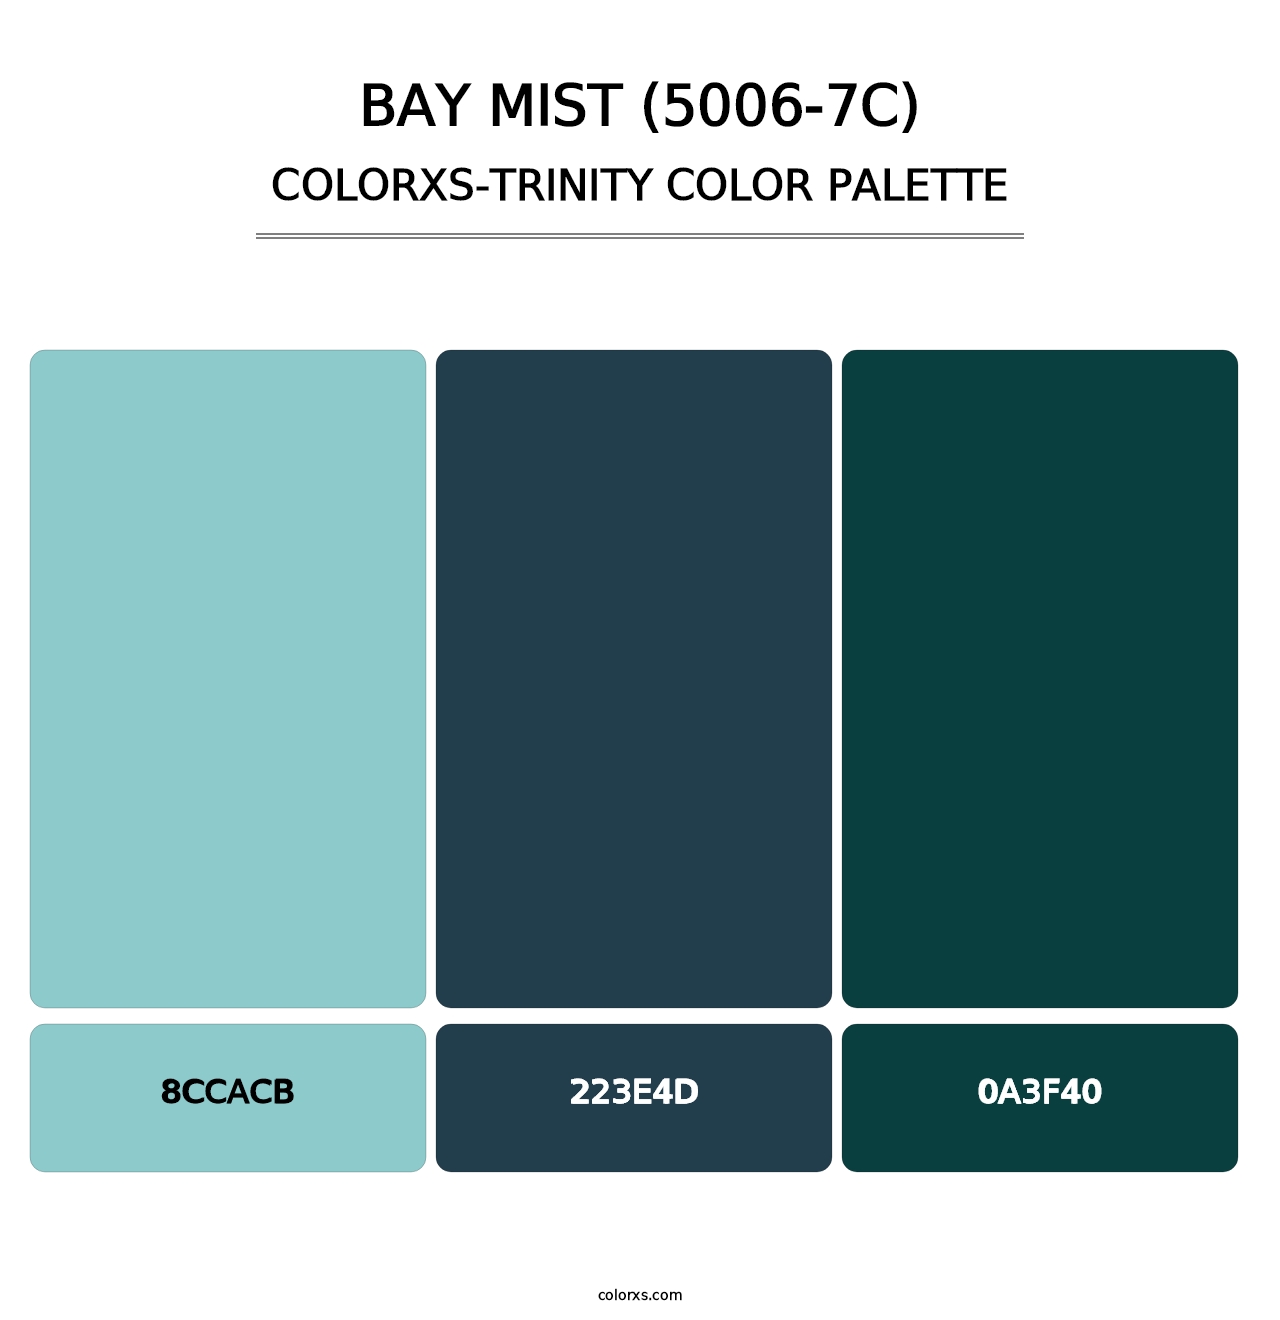 Bay Mist (5006-7C) - Colorxs Trinity Palette